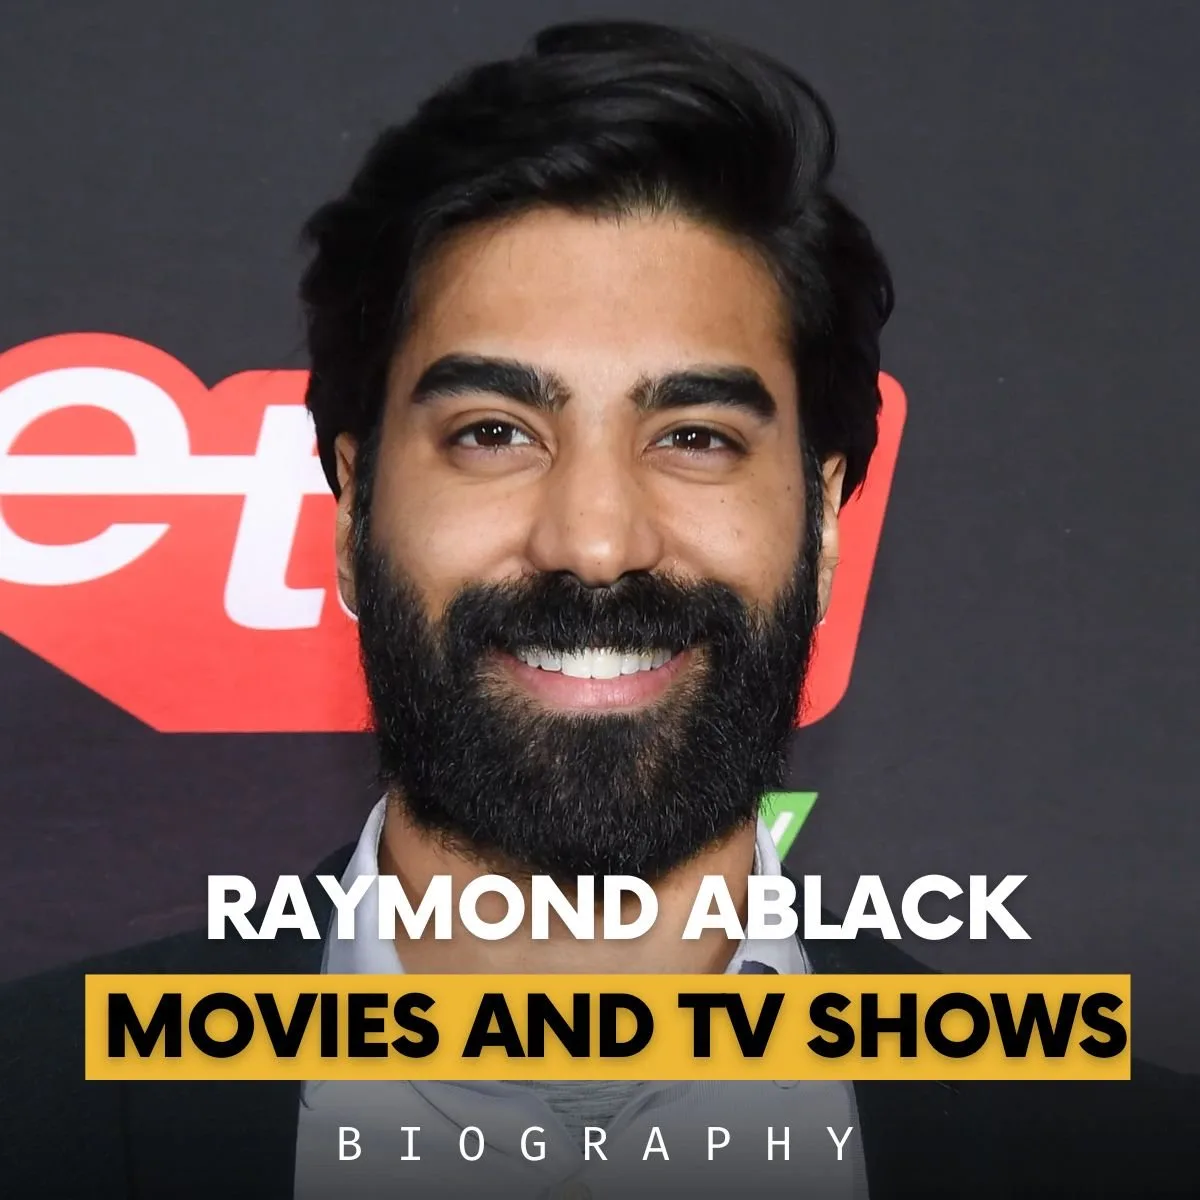 Raymond Ablack movies and TV shows